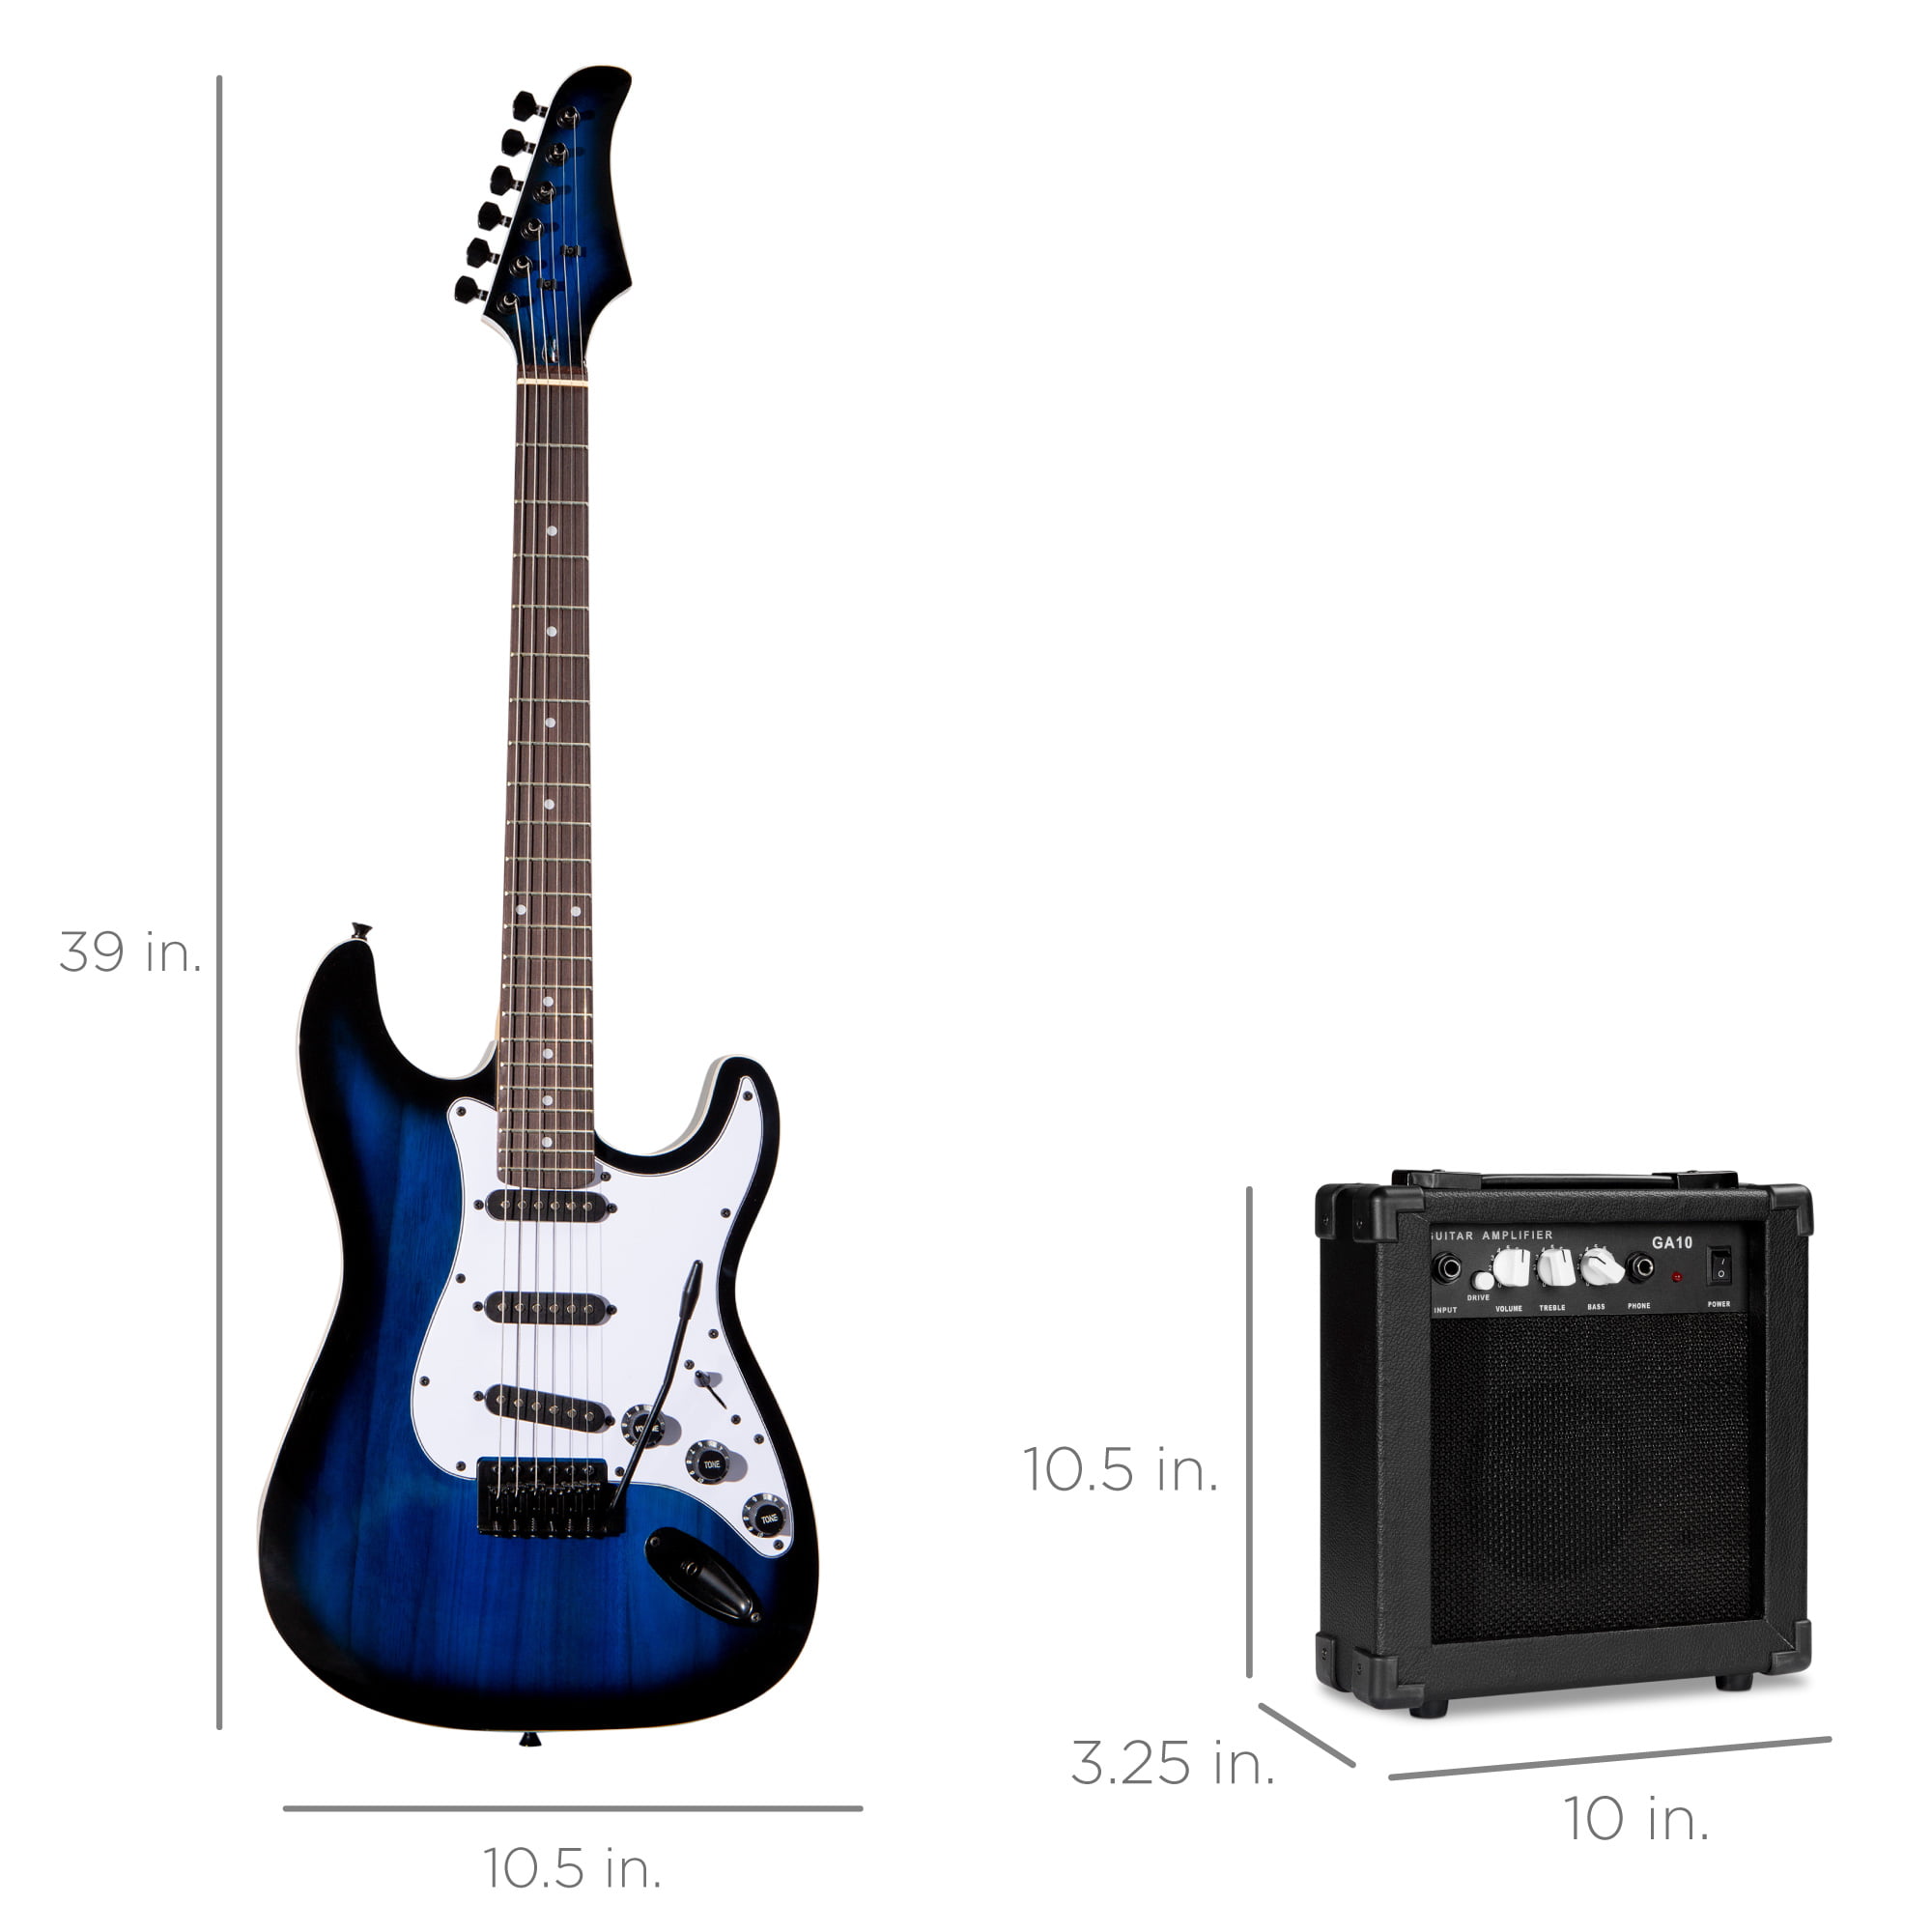 Picks Tremolo Bar Strings Bag Digital Tuner Cable-Blue Sun MGROLX 22 Fret Electric Guitar 39 Inch Full Size Beginner Kit For Starter Whit 20W Amp Strap 